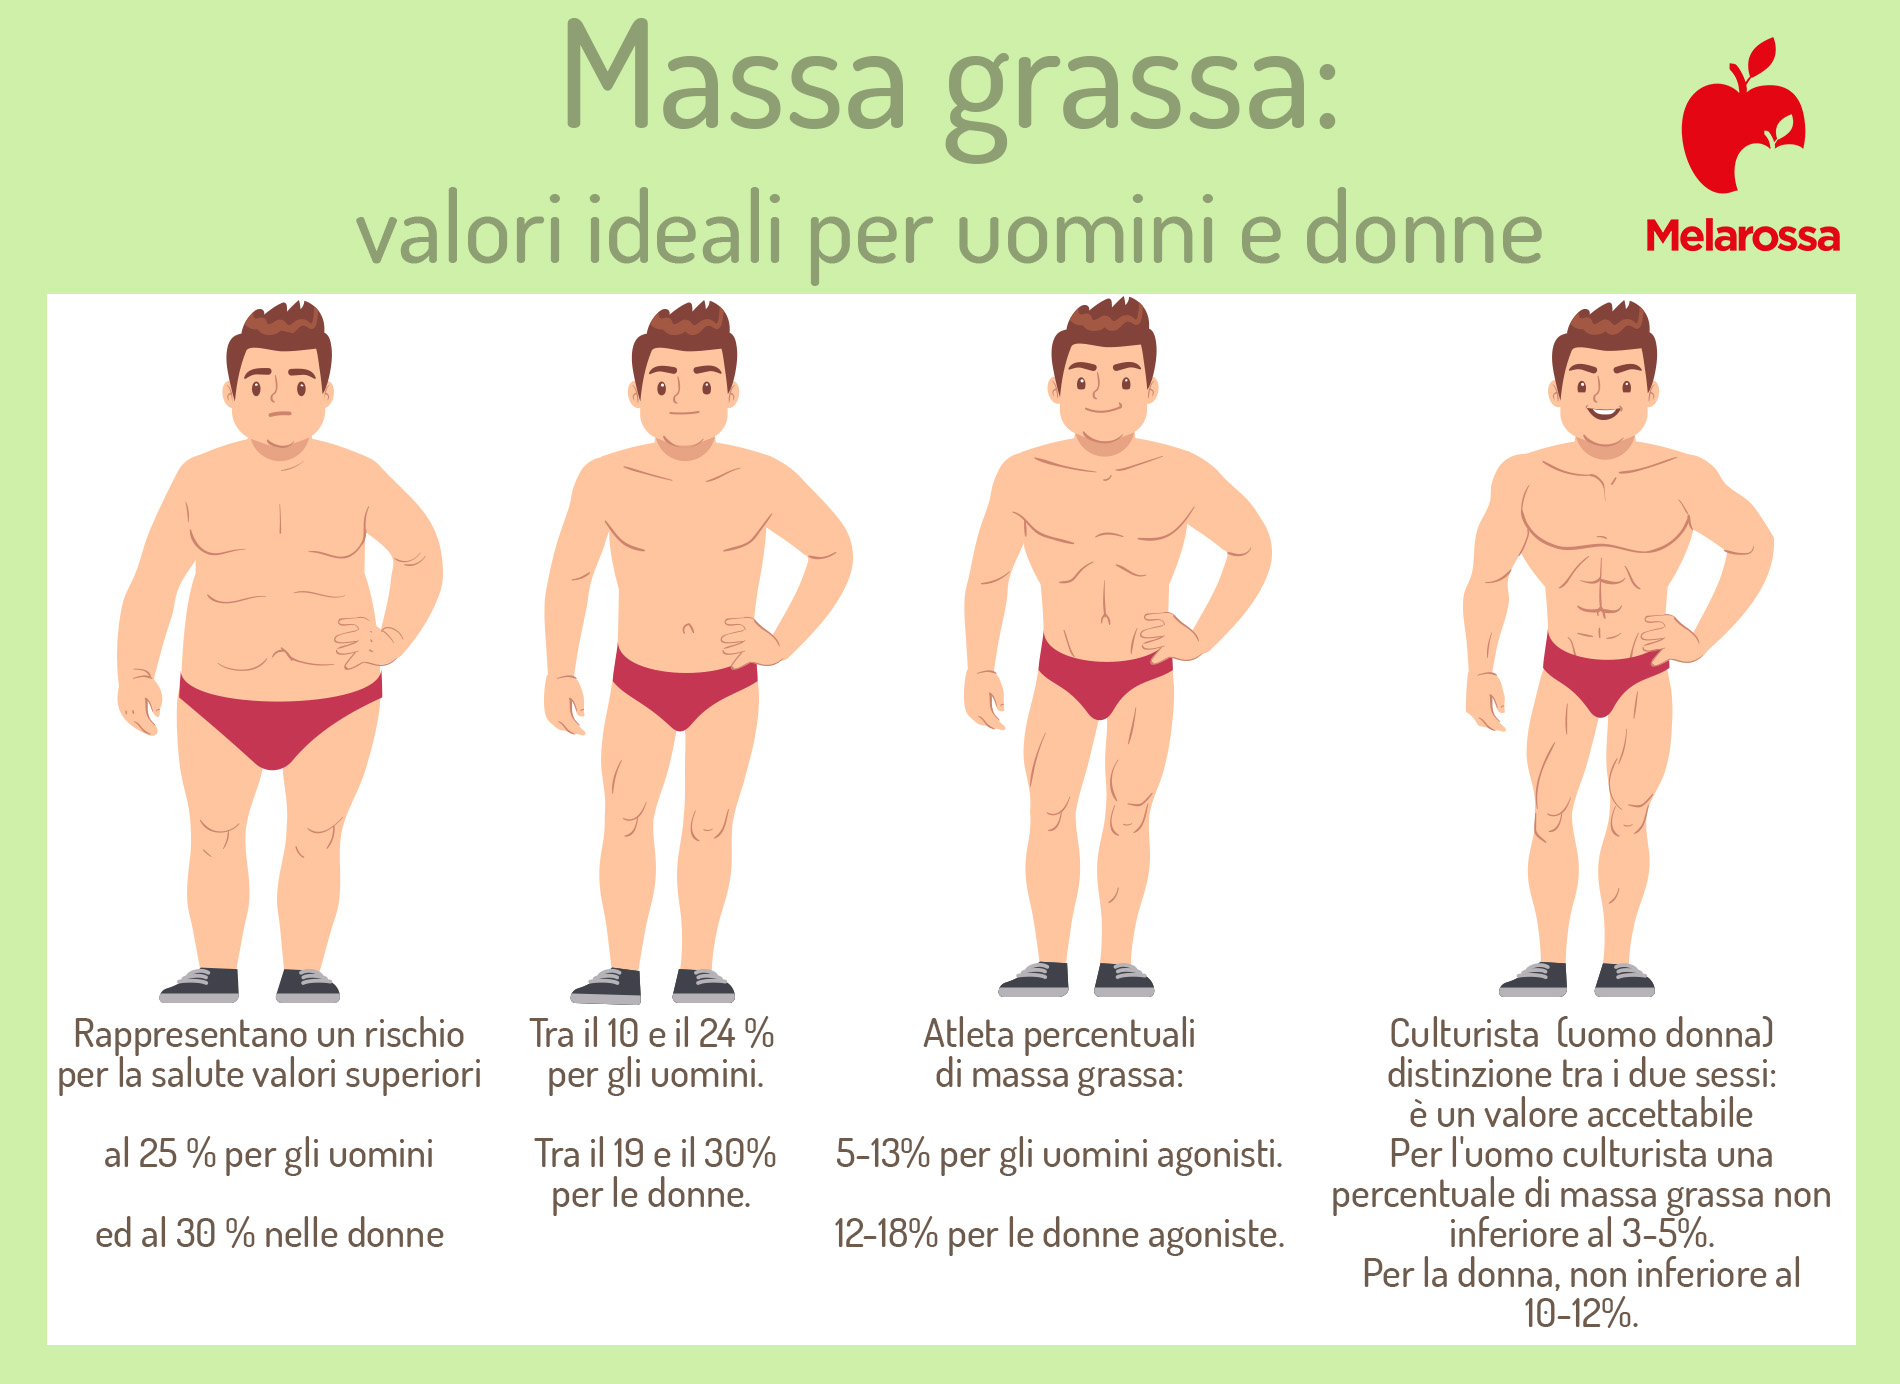 massa grassa: valori ideali uomini e donne 